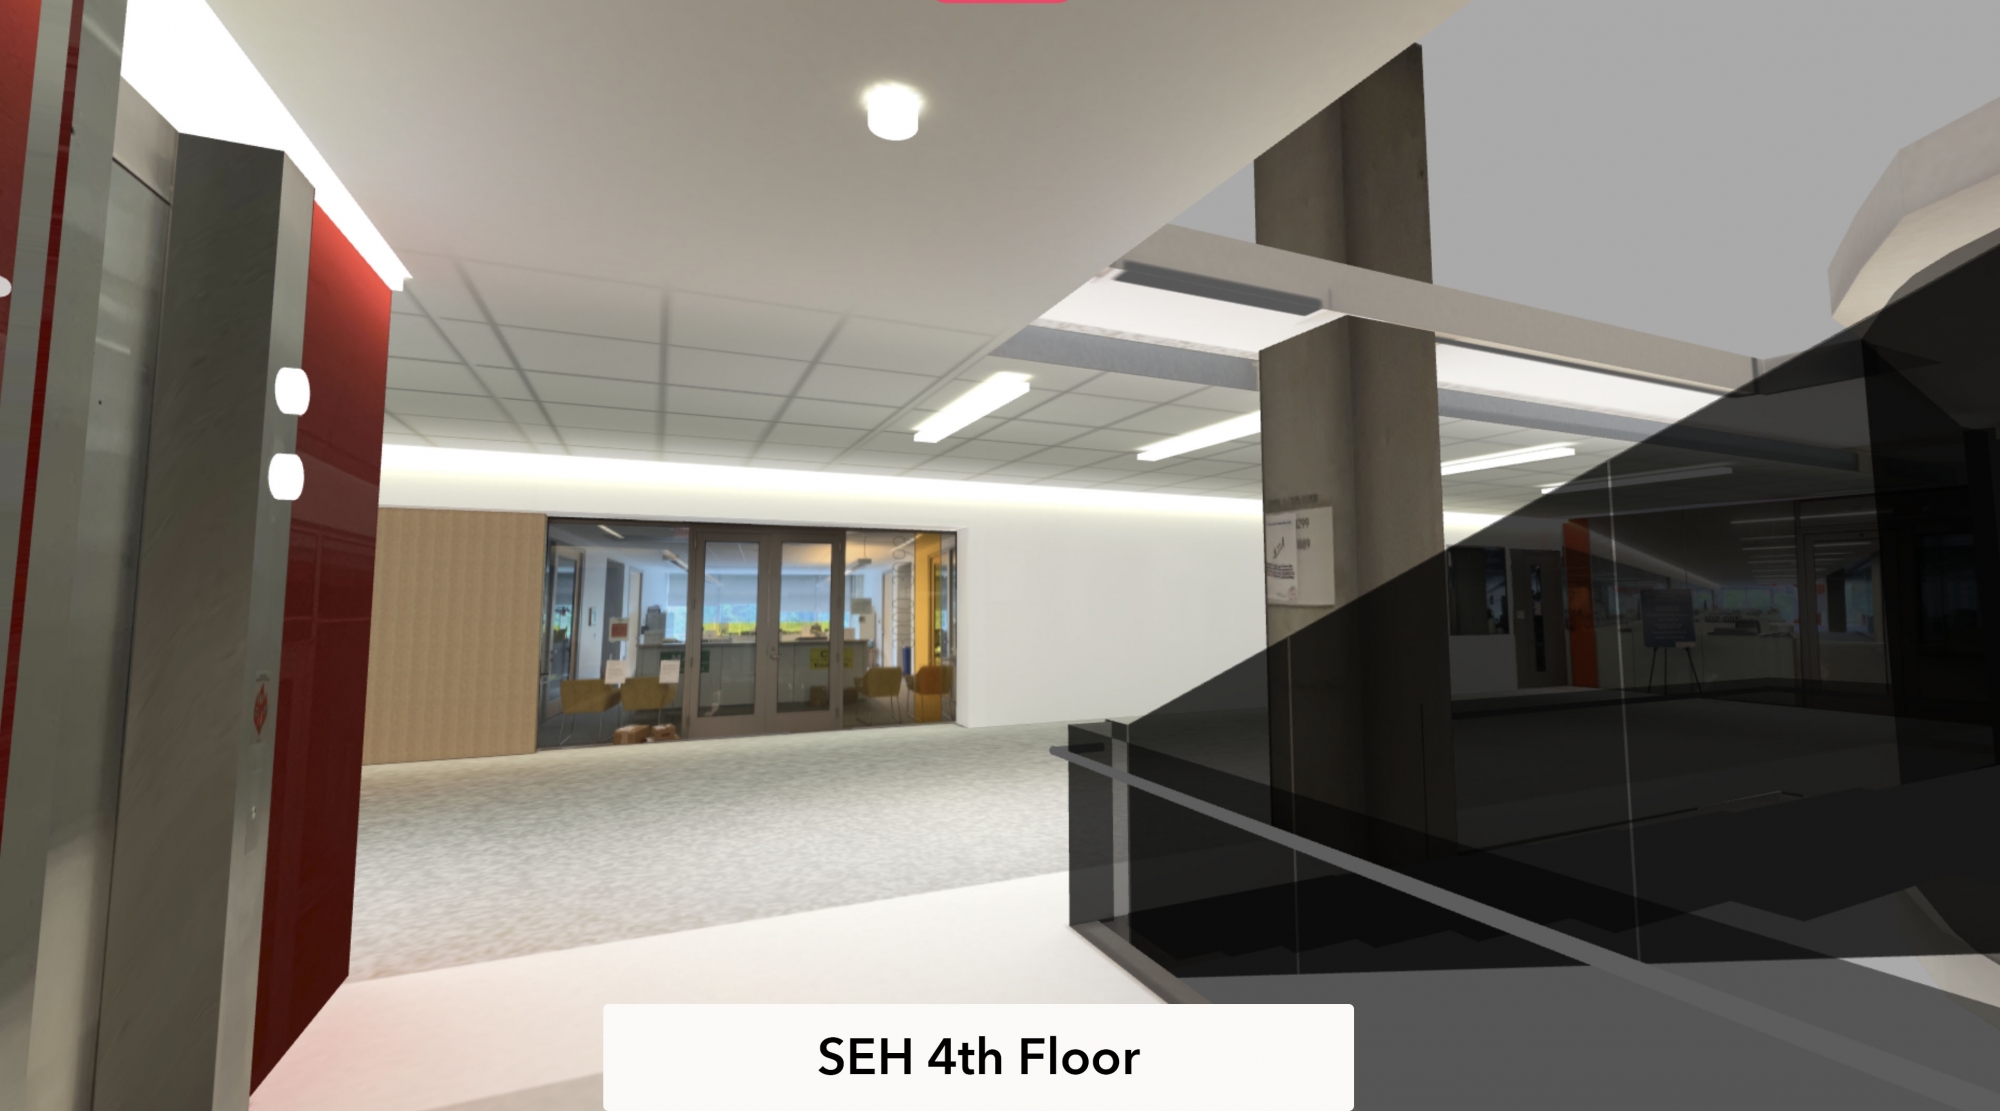 seh 4th floor virtual room